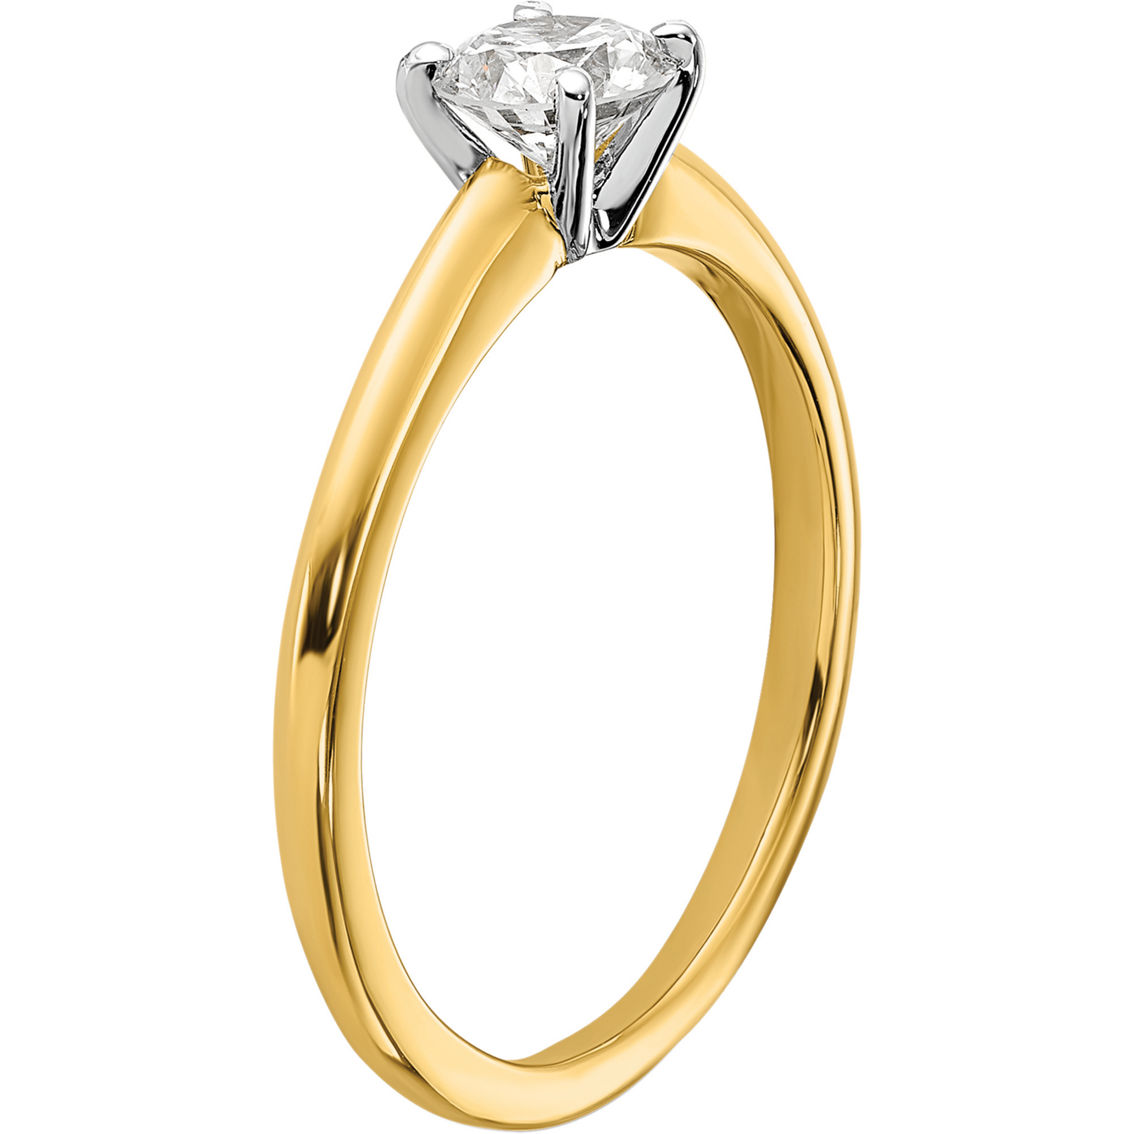 True Origin 14K Gold 1/2 ct. Certified Round Lab Grown Diamond Solitaire Ring - Image 2 of 4